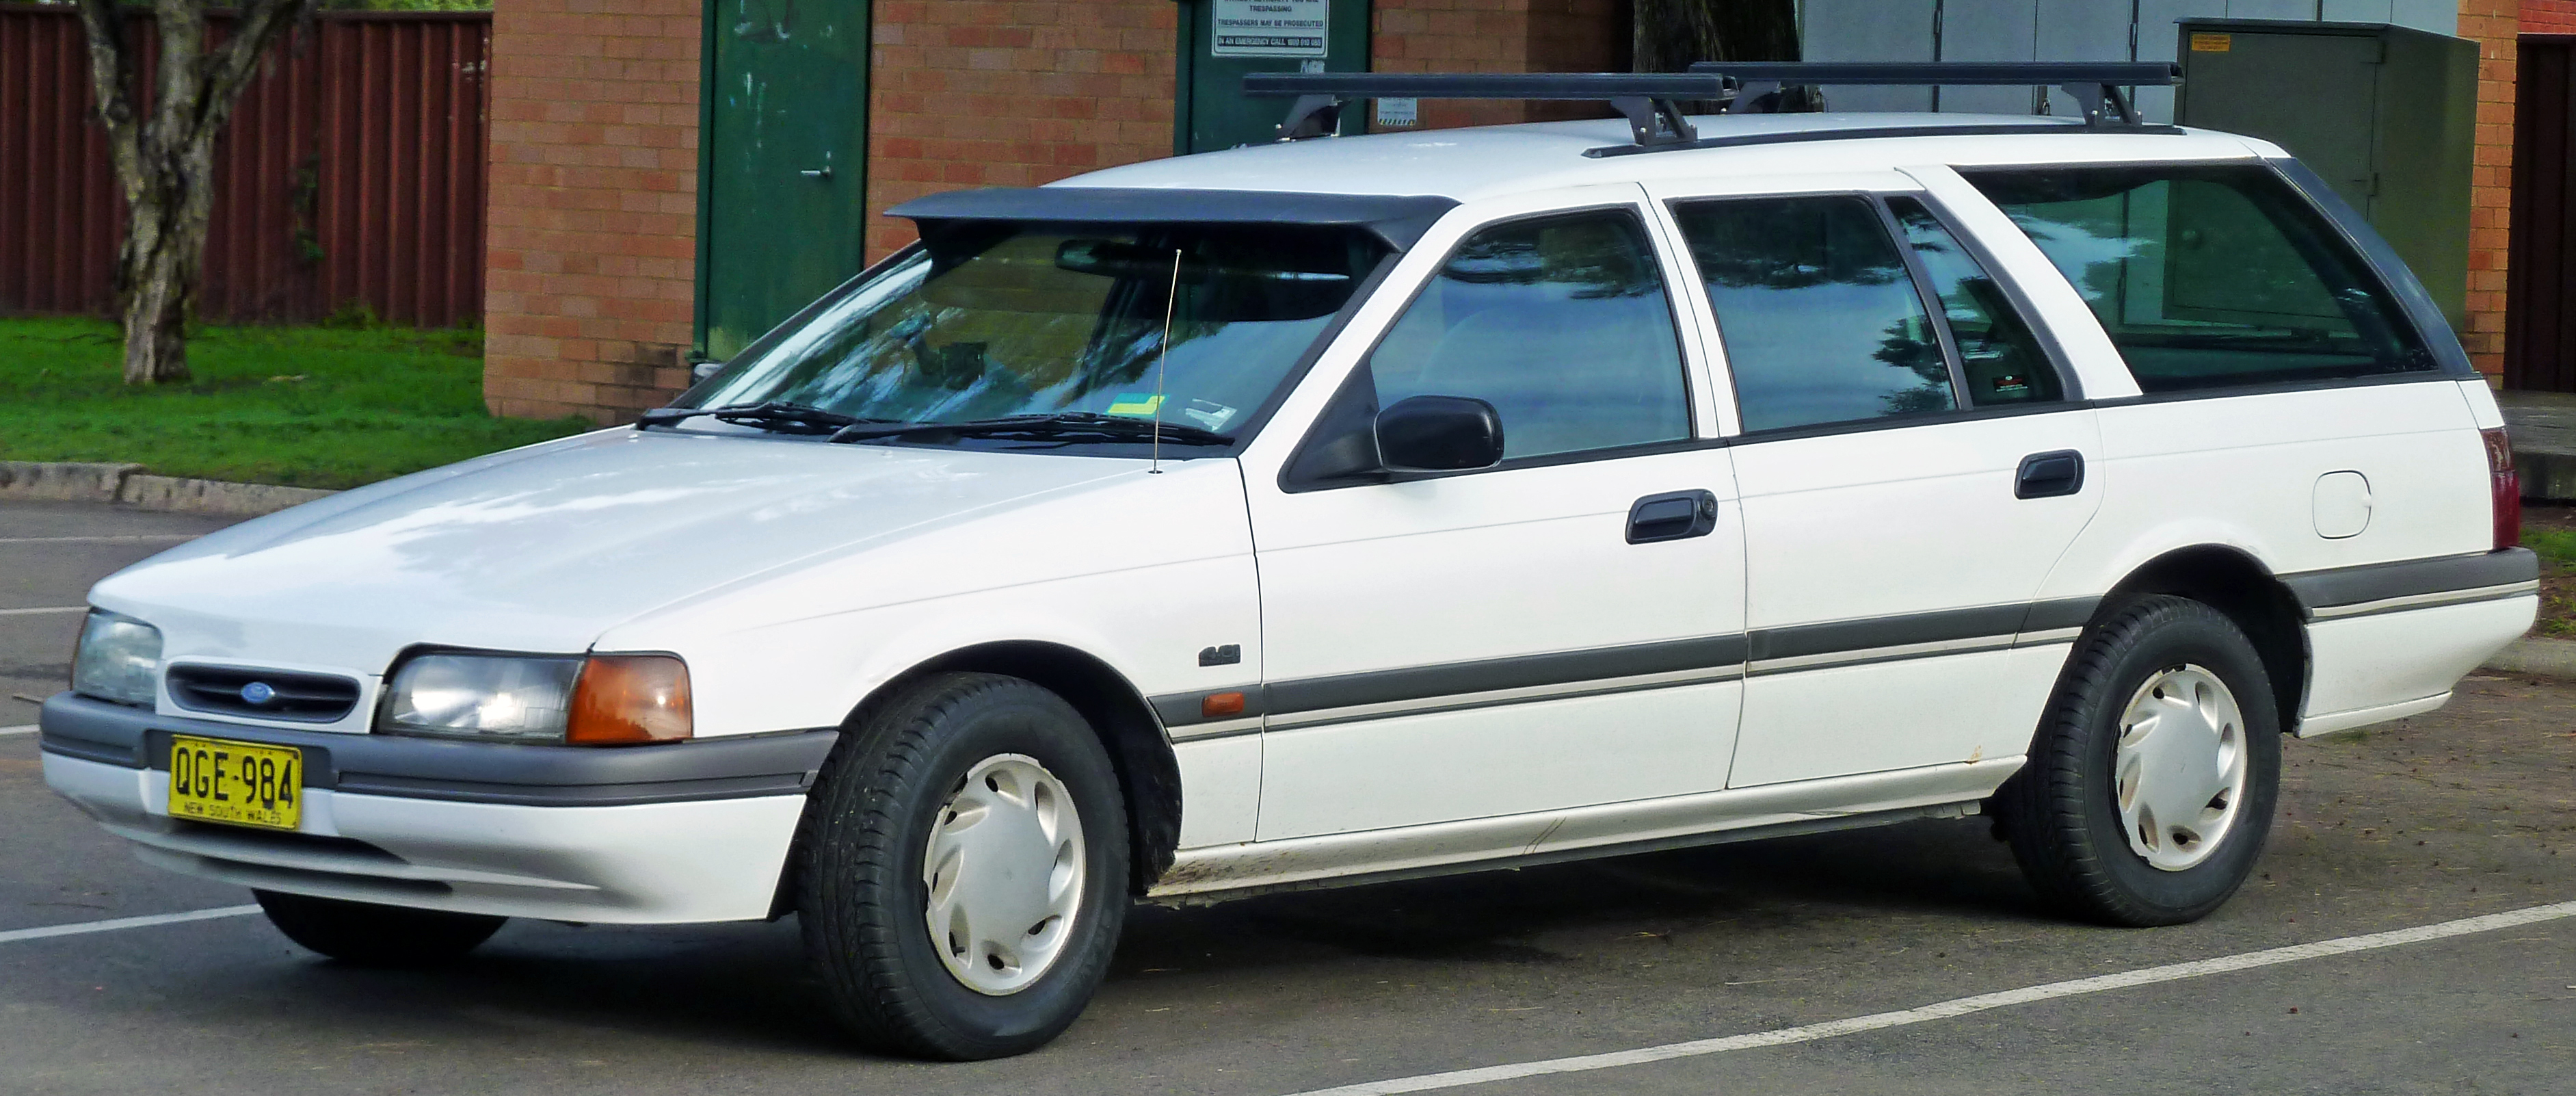 1994 Ford taurus station wagon sale #5